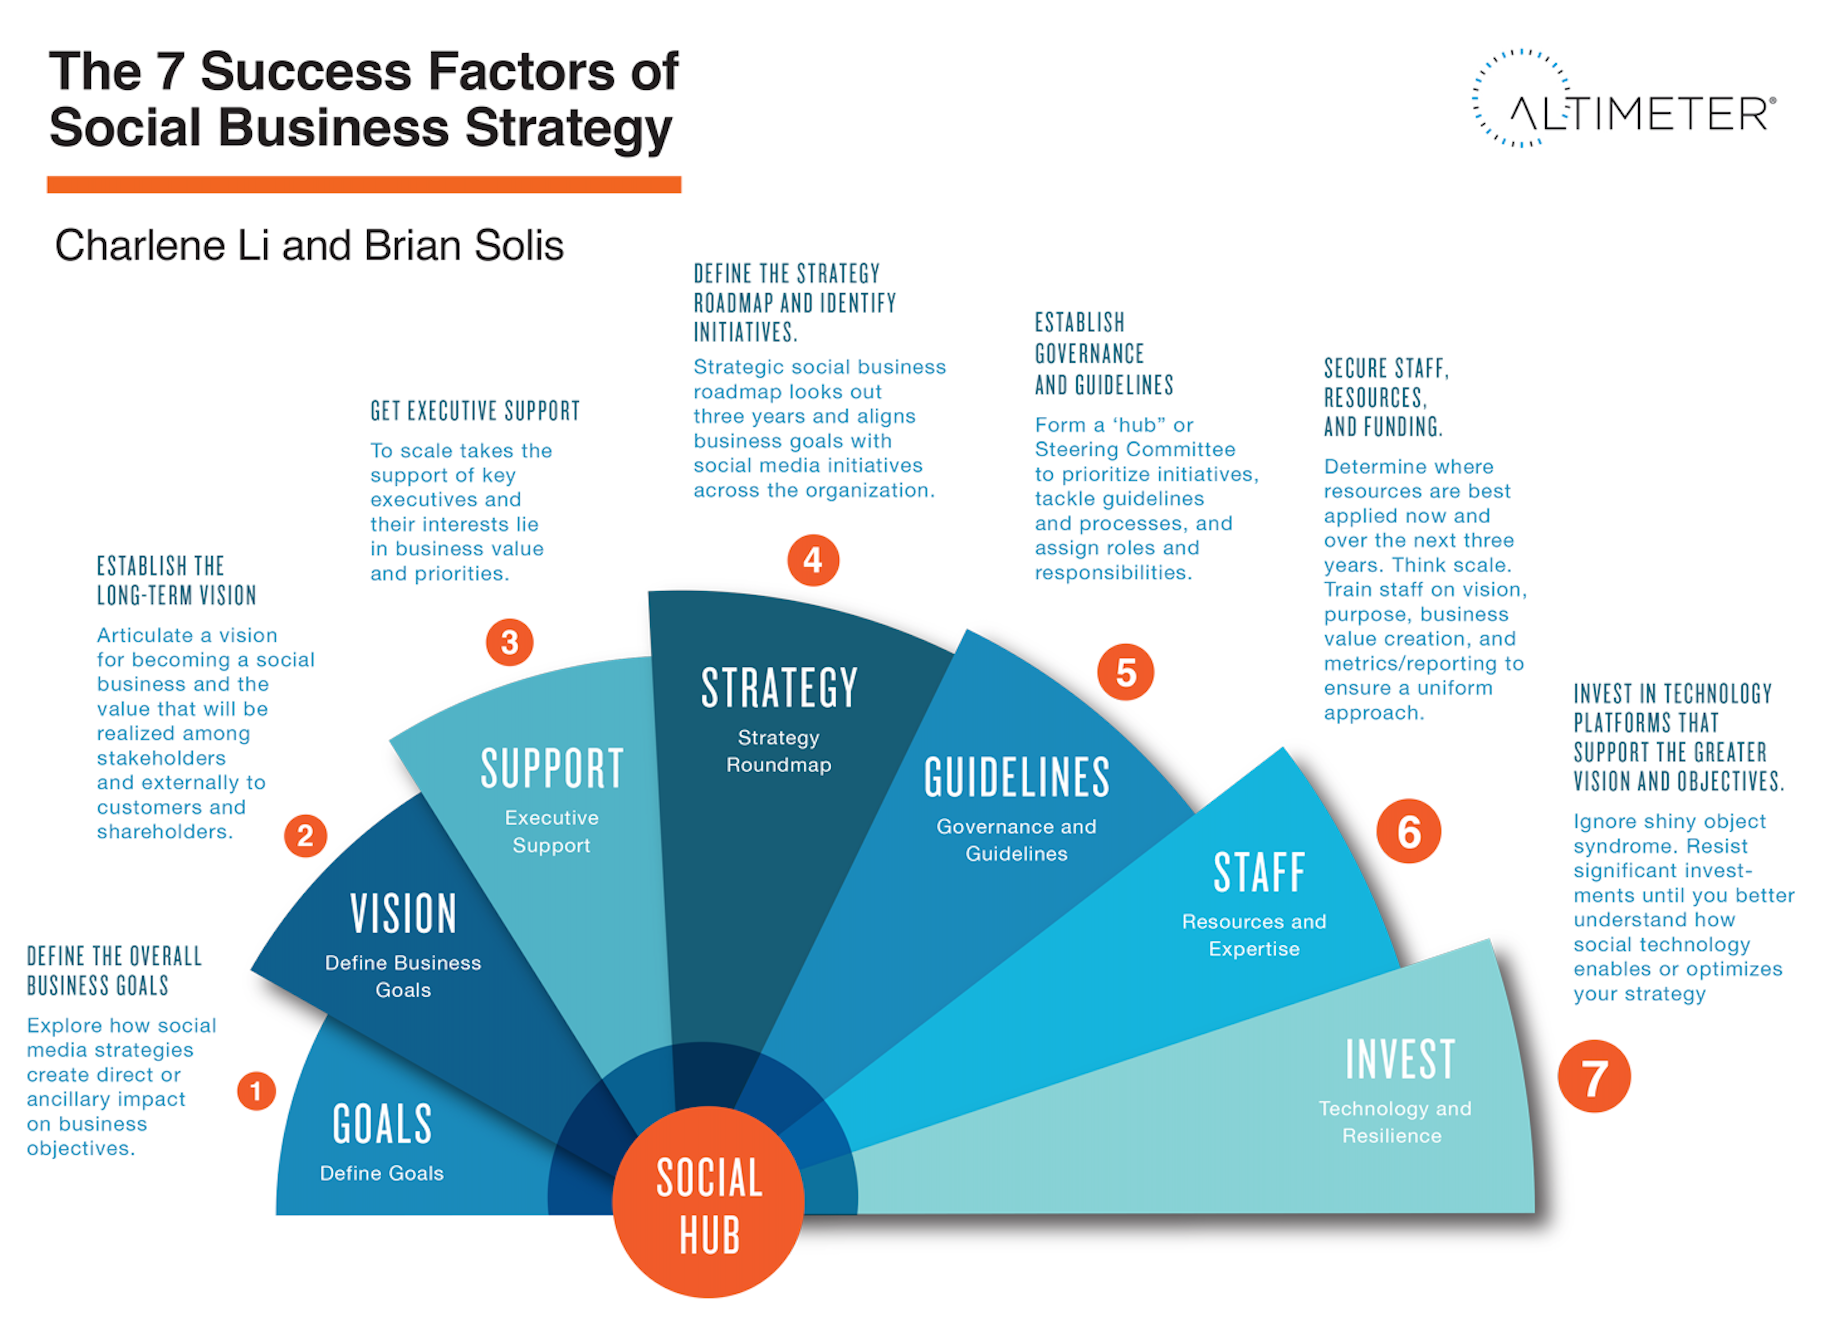 5 Key Factors to Successful Strategic Planning